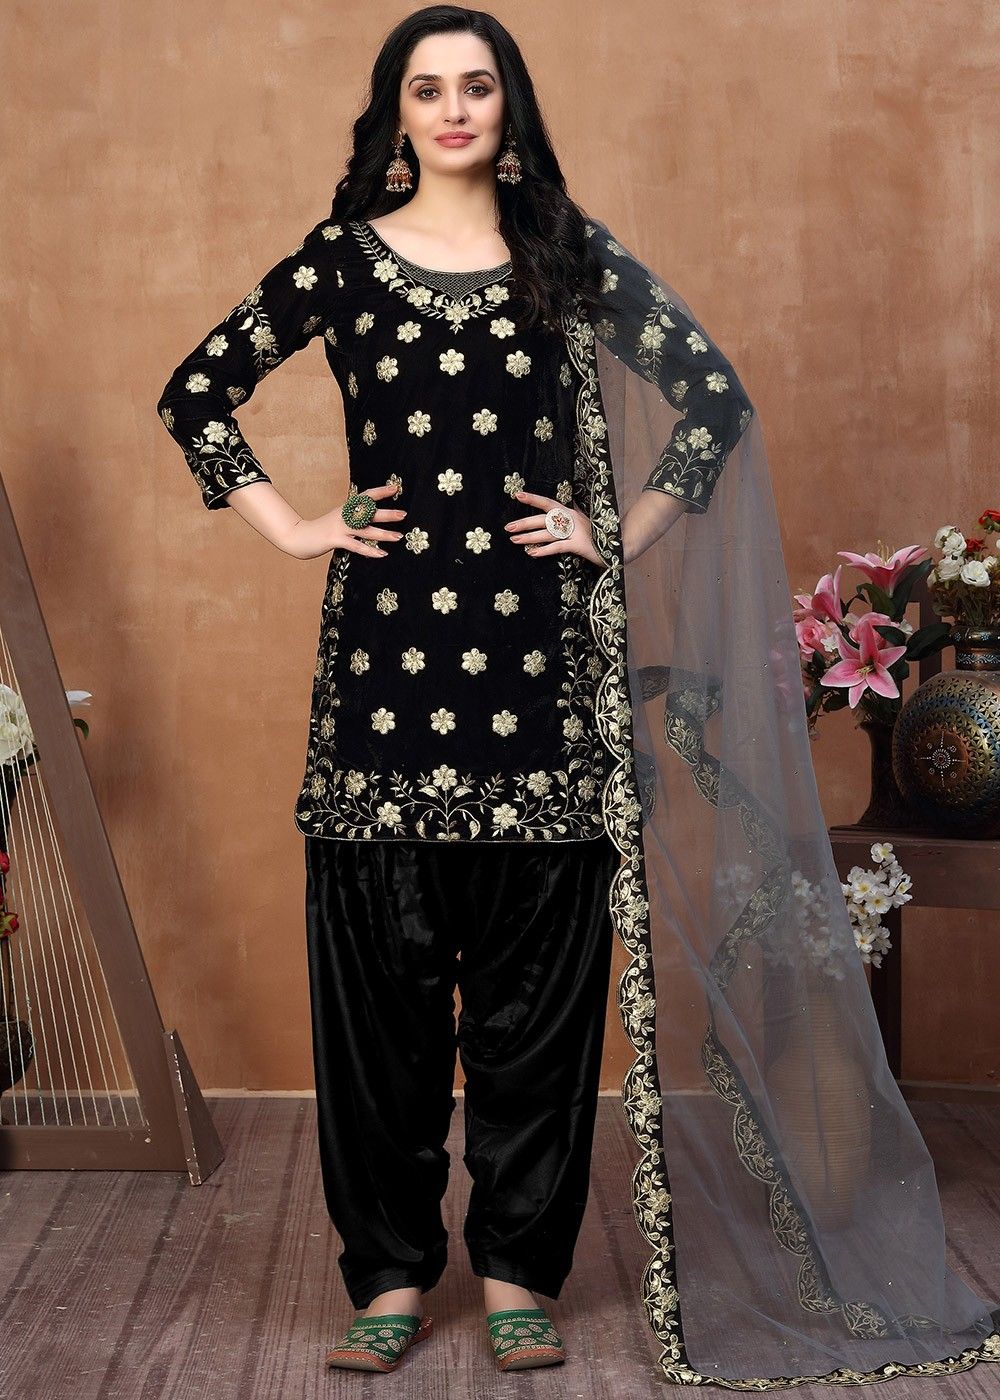 100+ Patiala Suit Design for Girl Latest | Punjabi - TailoringinHindi